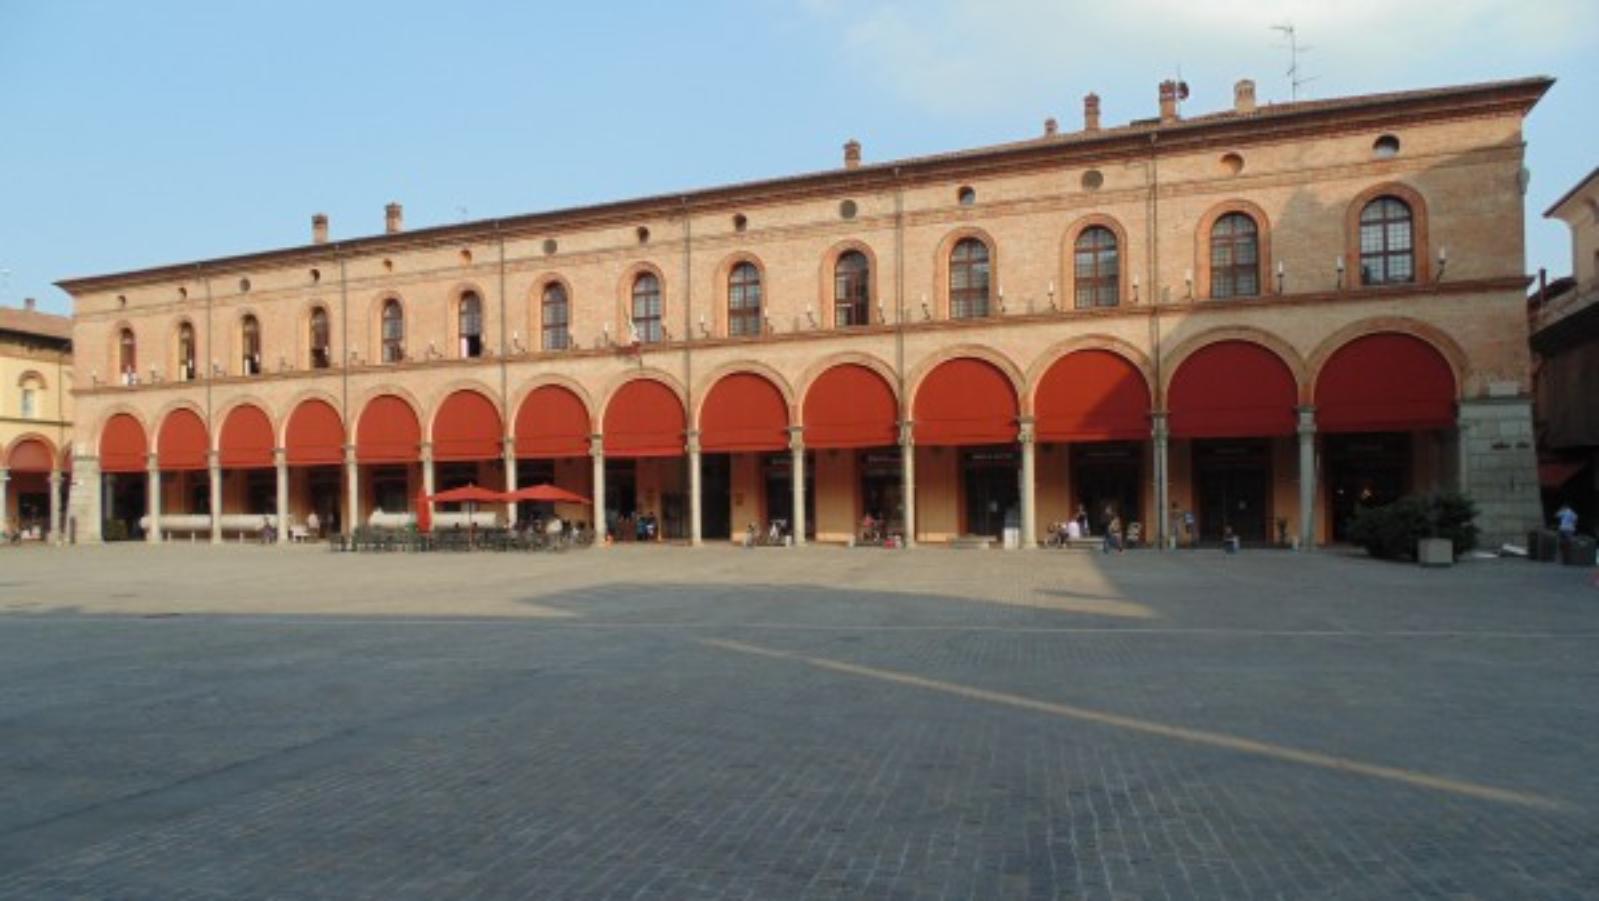 Palazzo Riario Sersanti, Imola, mibac-w-296, Mauro Lattuga